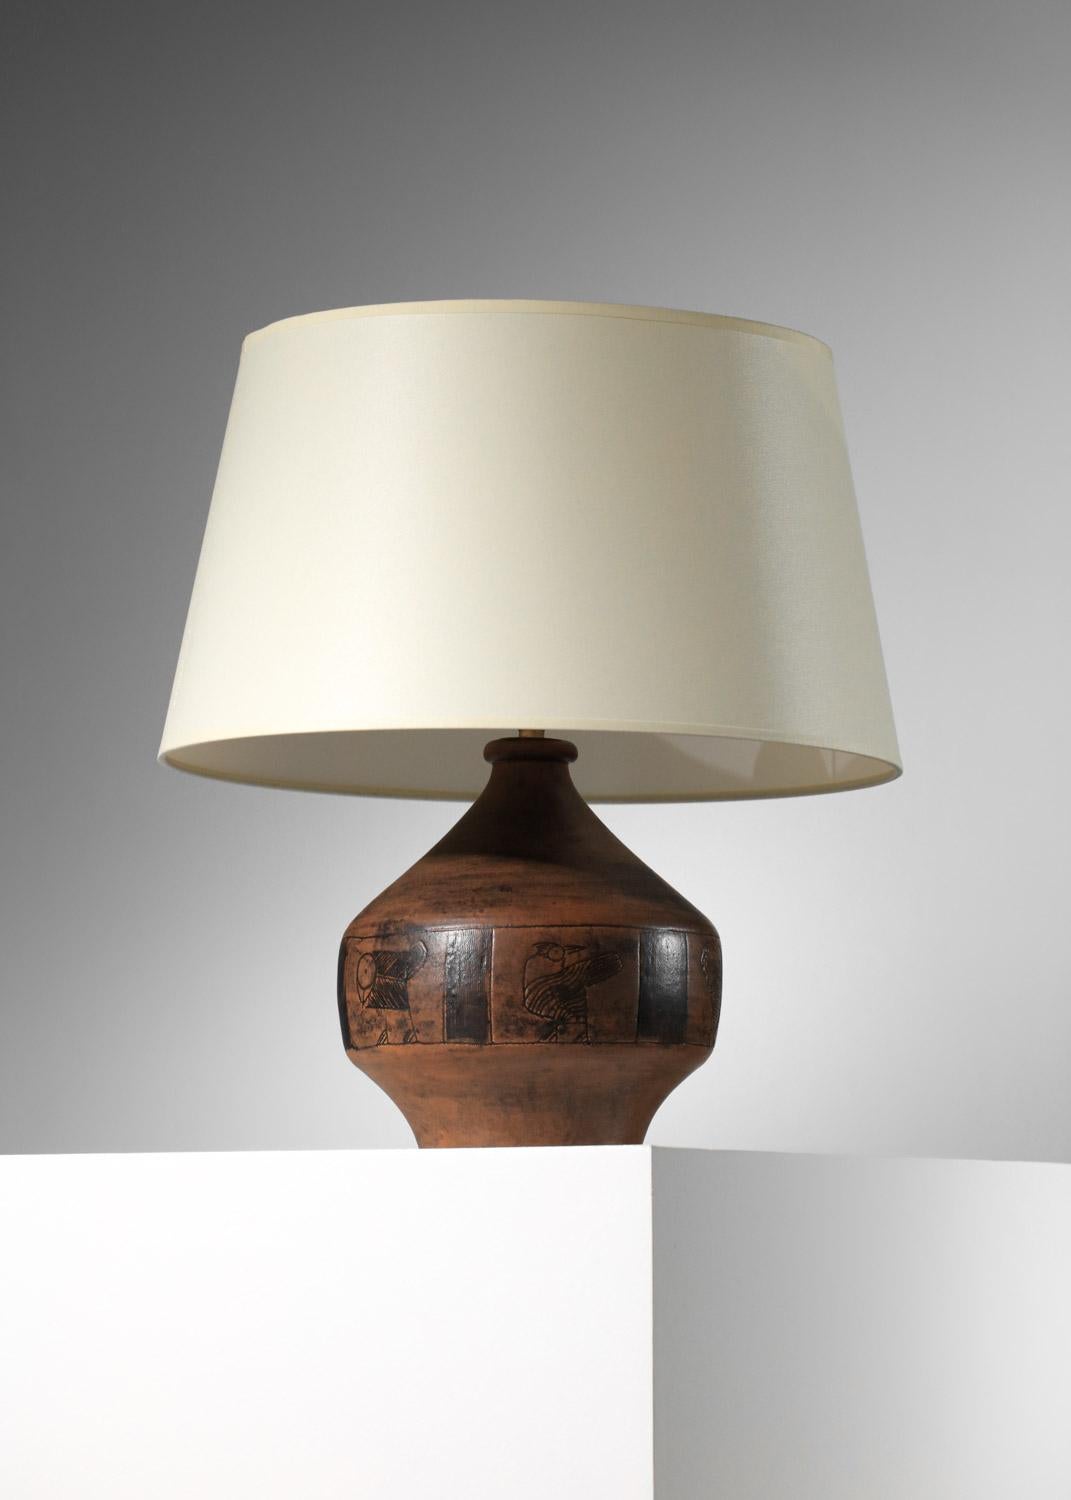 Jacques blin brown ceramic lamp with bird design   3